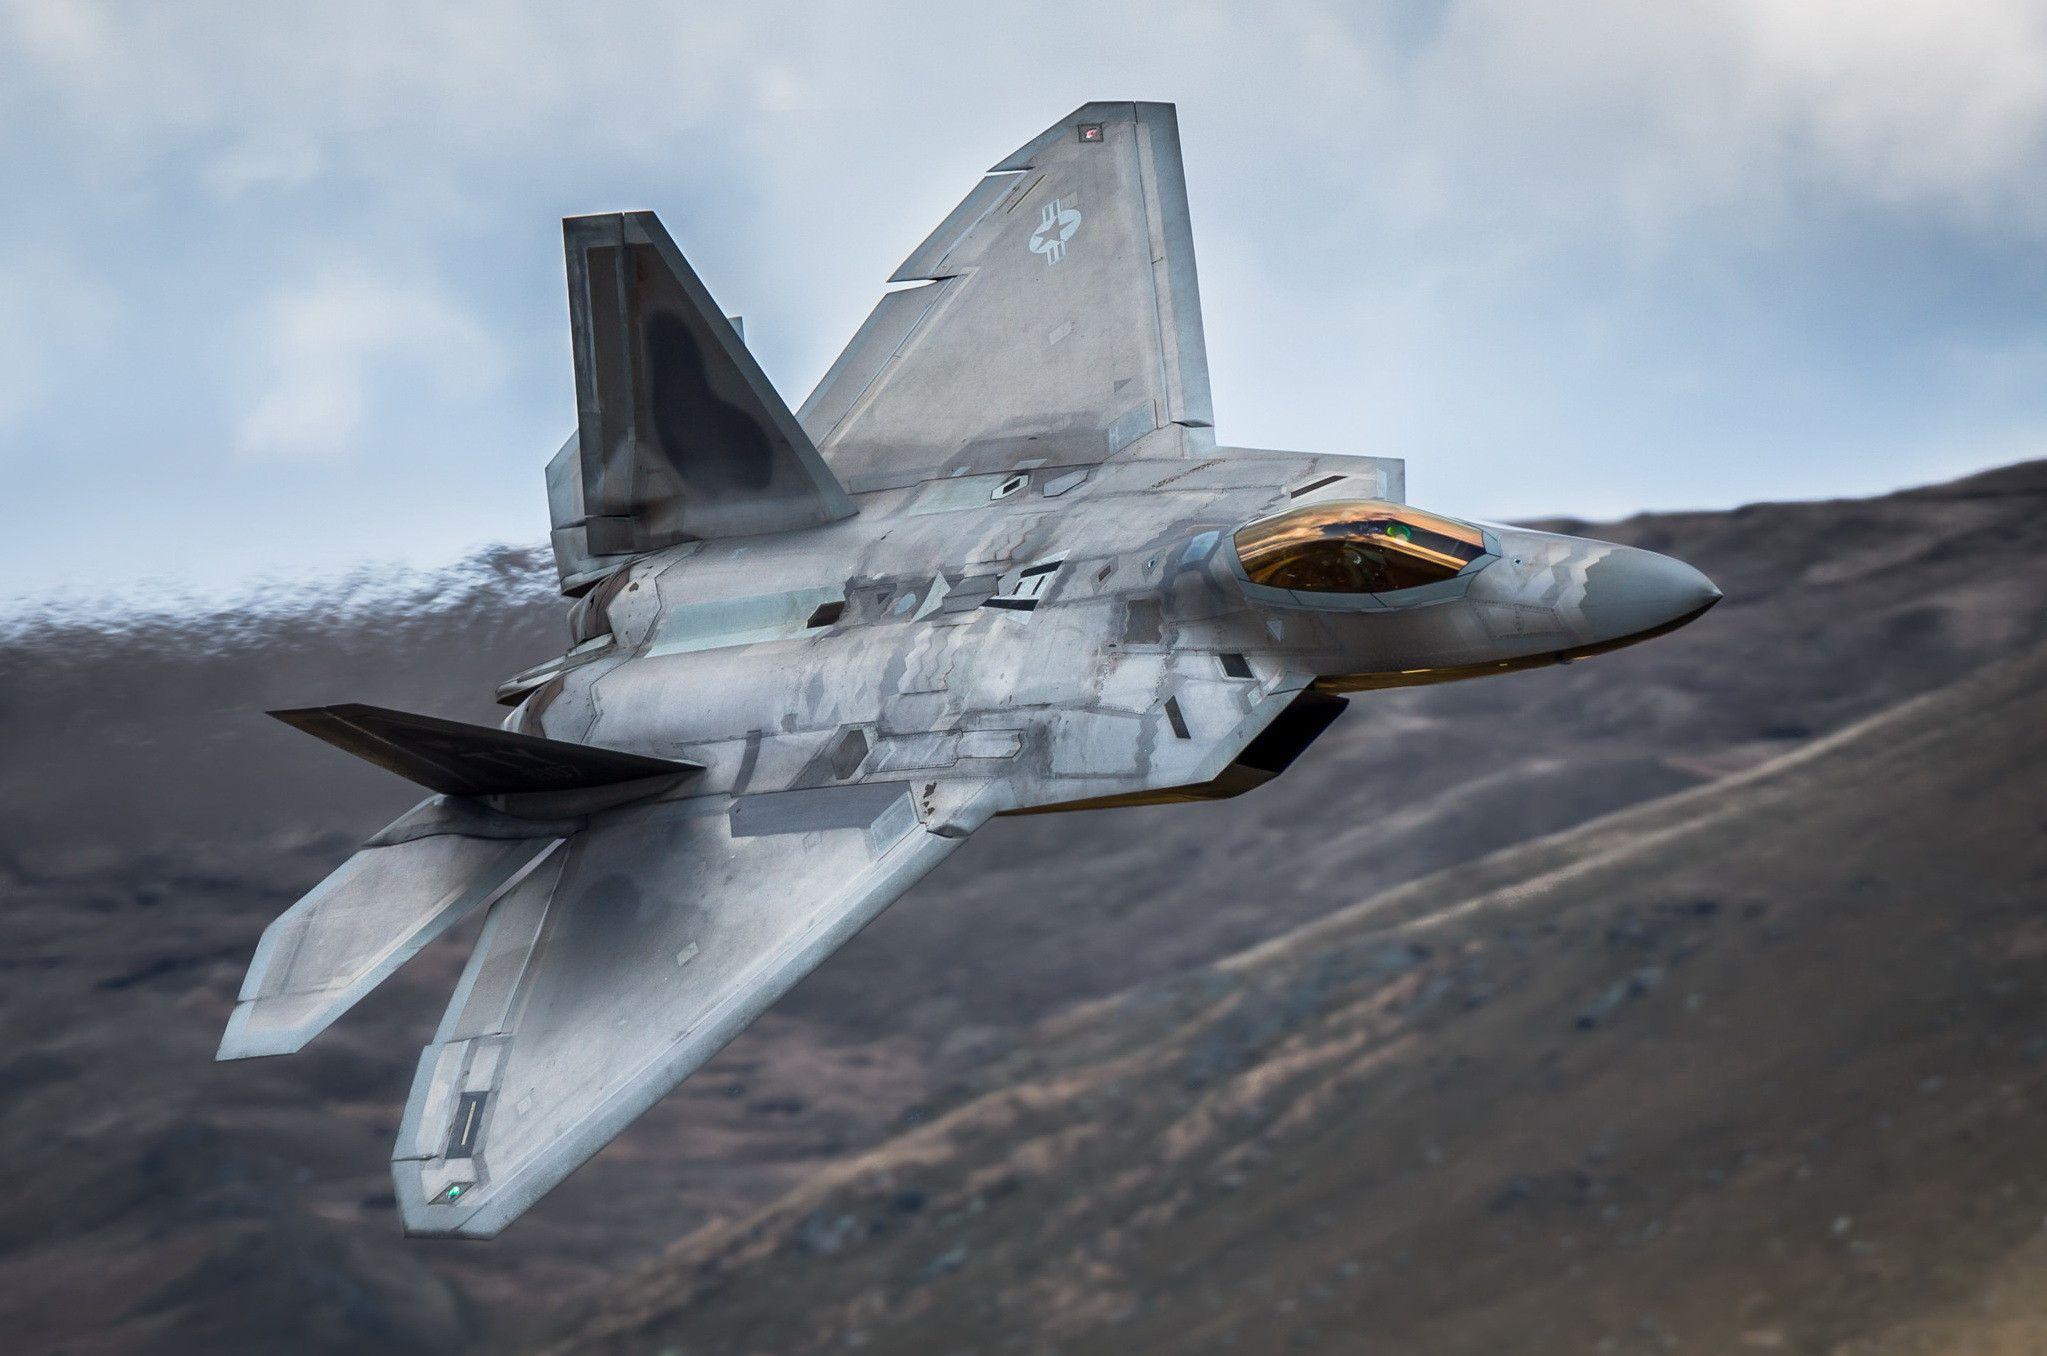 Download Lockheed Martin F 22 Raptor wallpapers for mobile phone free  Lockheed Martin F 22 Raptor HD pictures